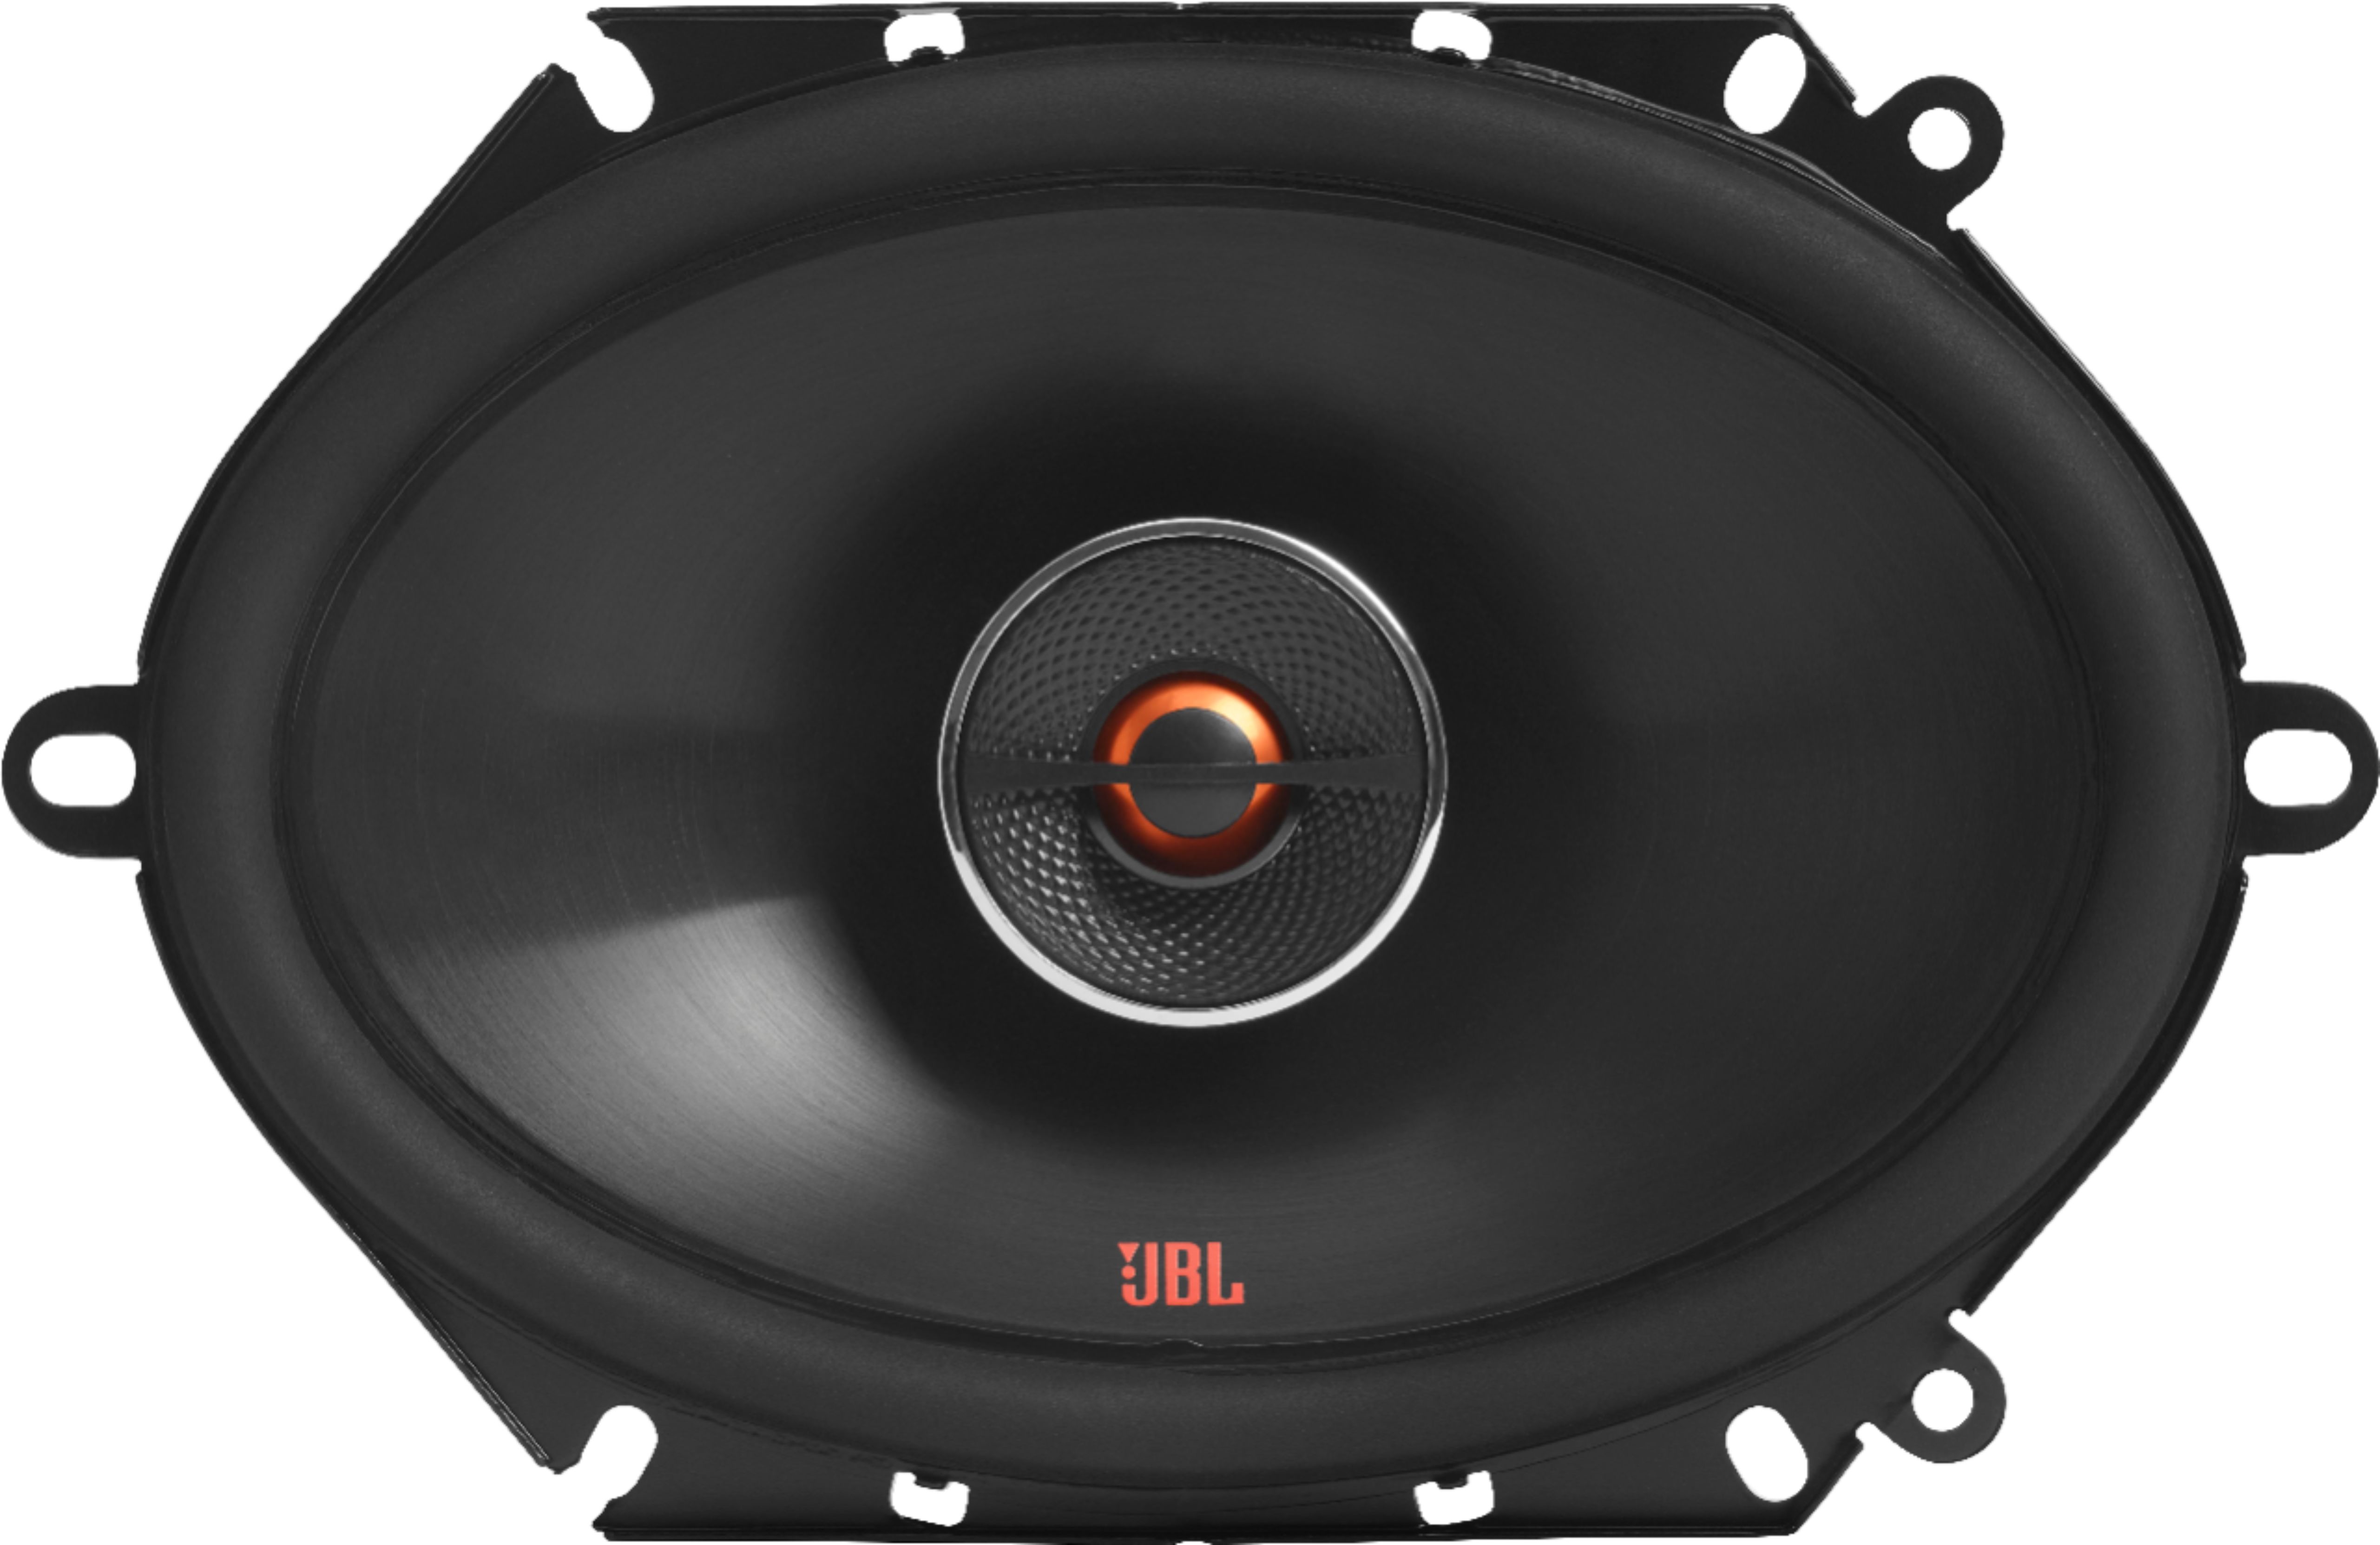 JBL - GX Series 6" x 8" / 5" x 7" 2-Way Coaxial Car Loudspeakers with Polypropylene Cones (Pair) - Black